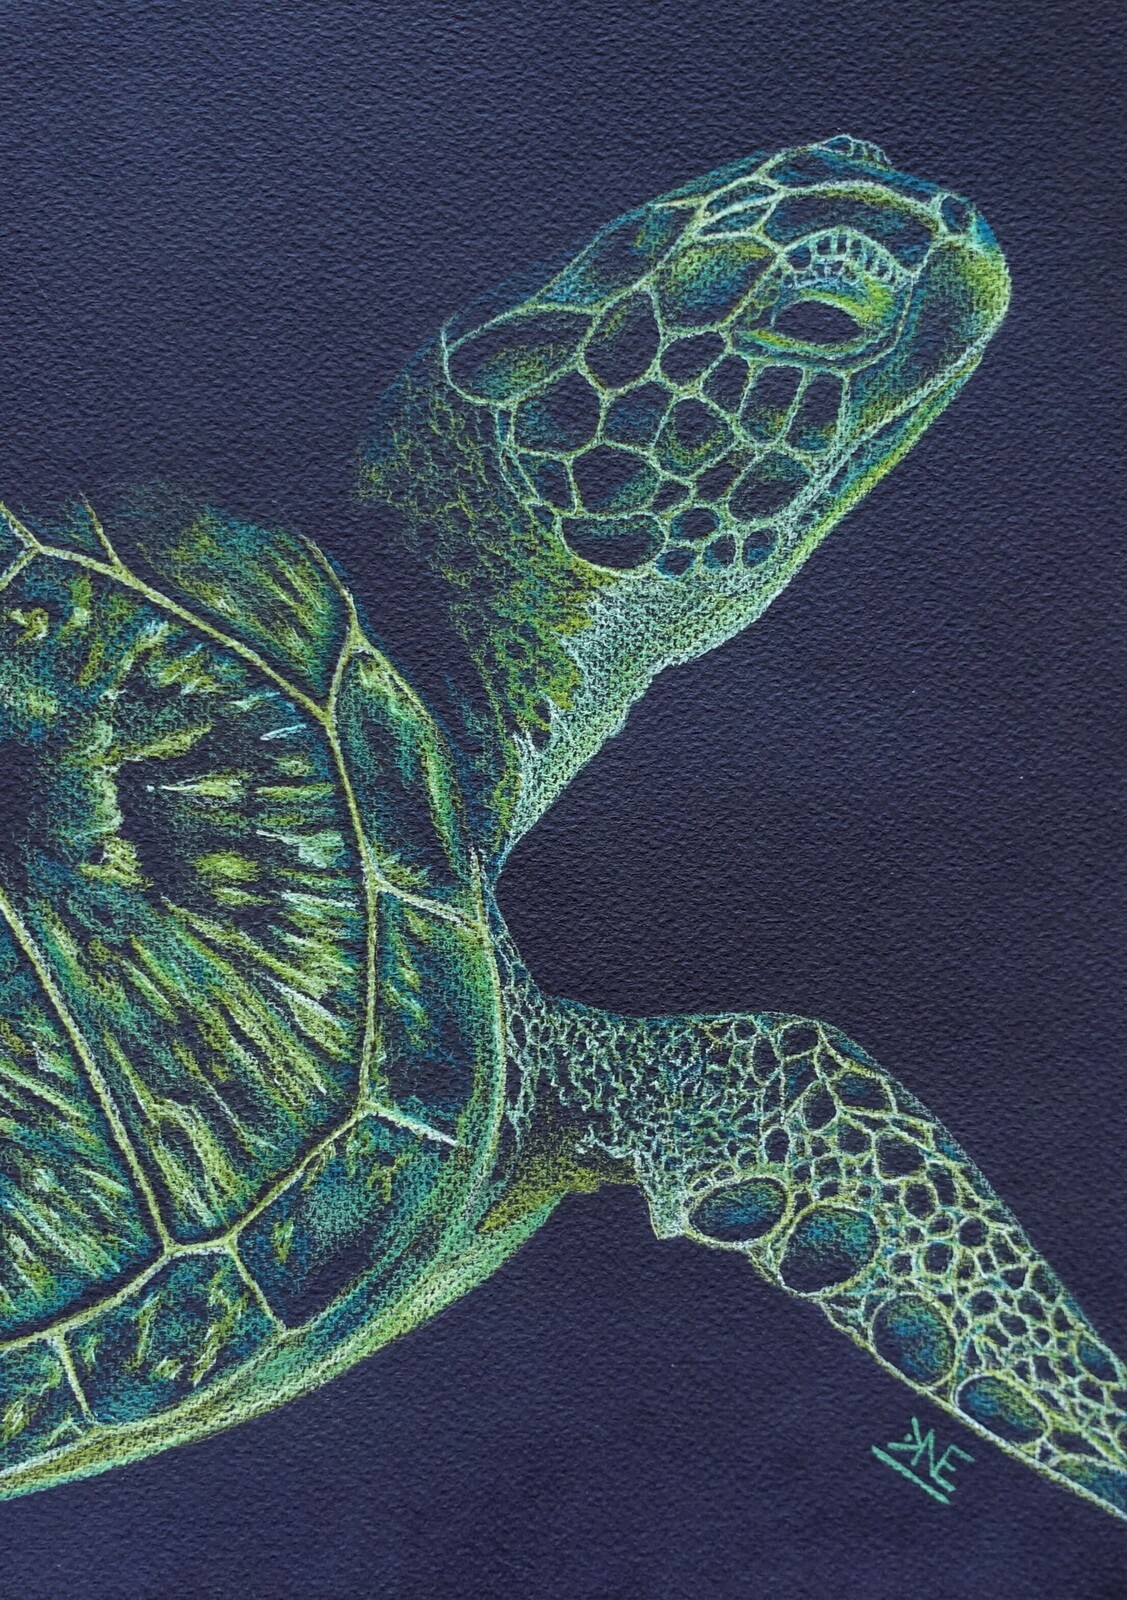 Sea Turtle colored pencil drawing